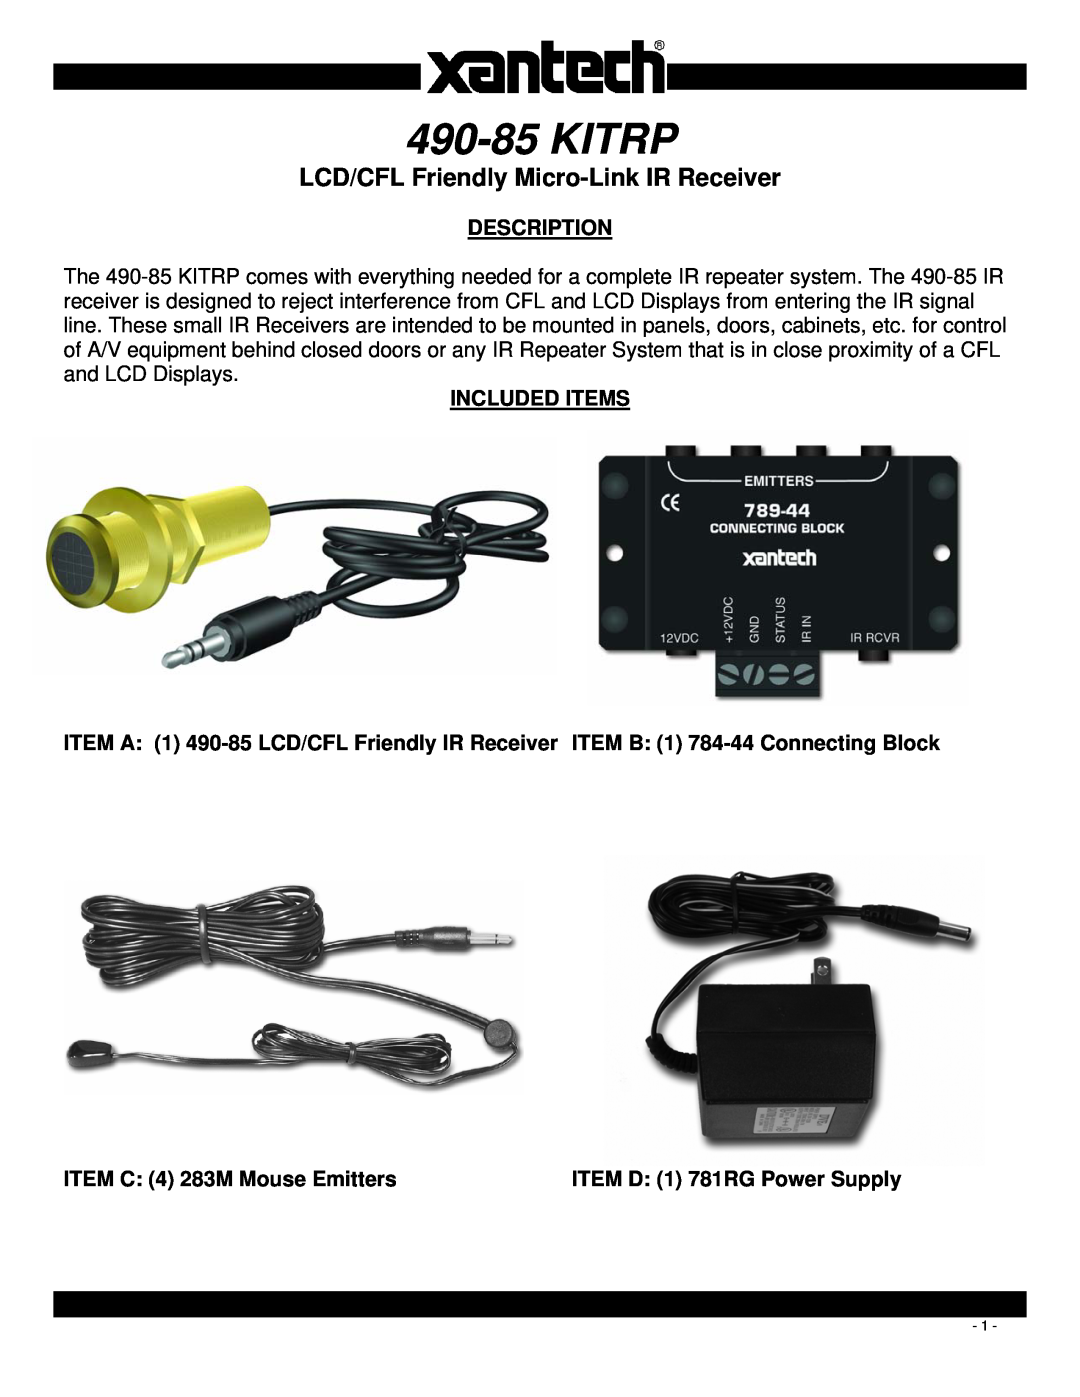 Xantech 490-85 KITRP manual Description, Included Items, ITEM C 4 283M Mouse Emitters, ITEM D 1 781RG Power Supply 